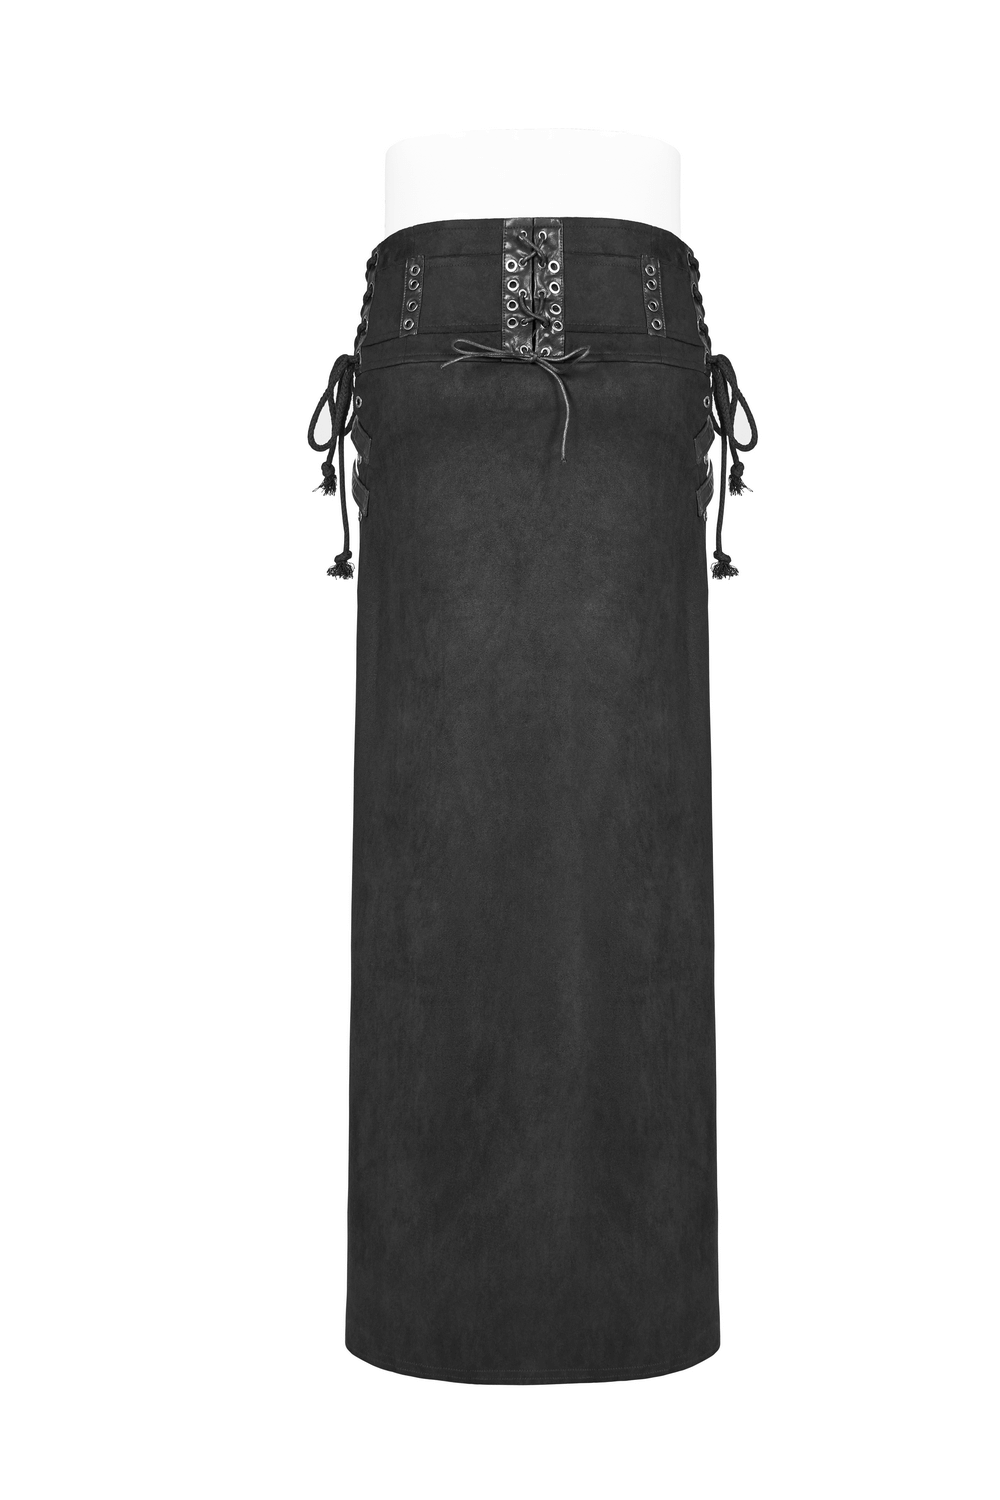 Black Gothic Punk Long Skirt-Kilt with Buckles